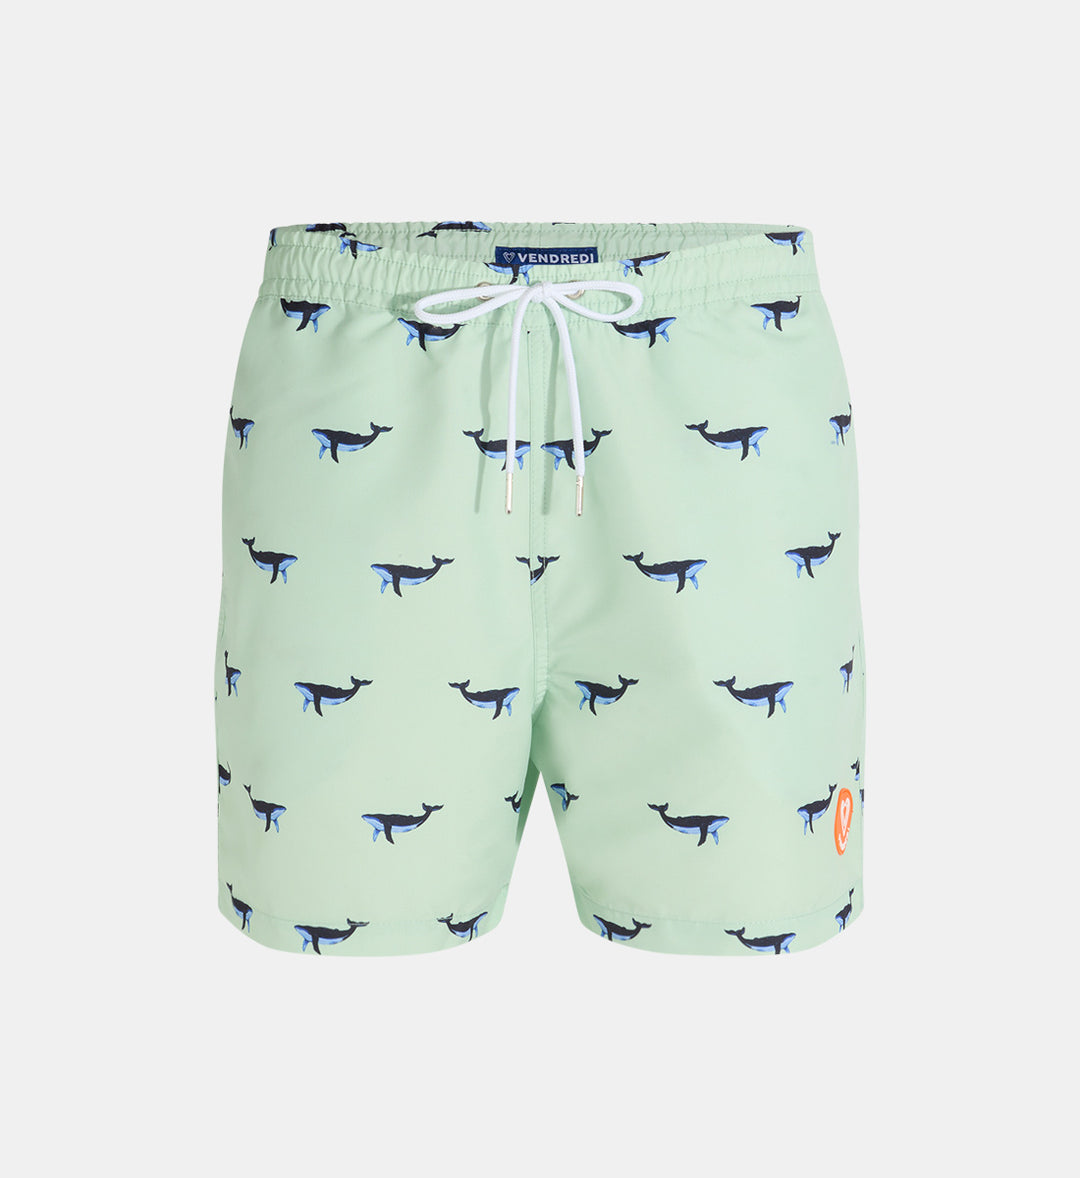 Swim shorts - Le Cetacean